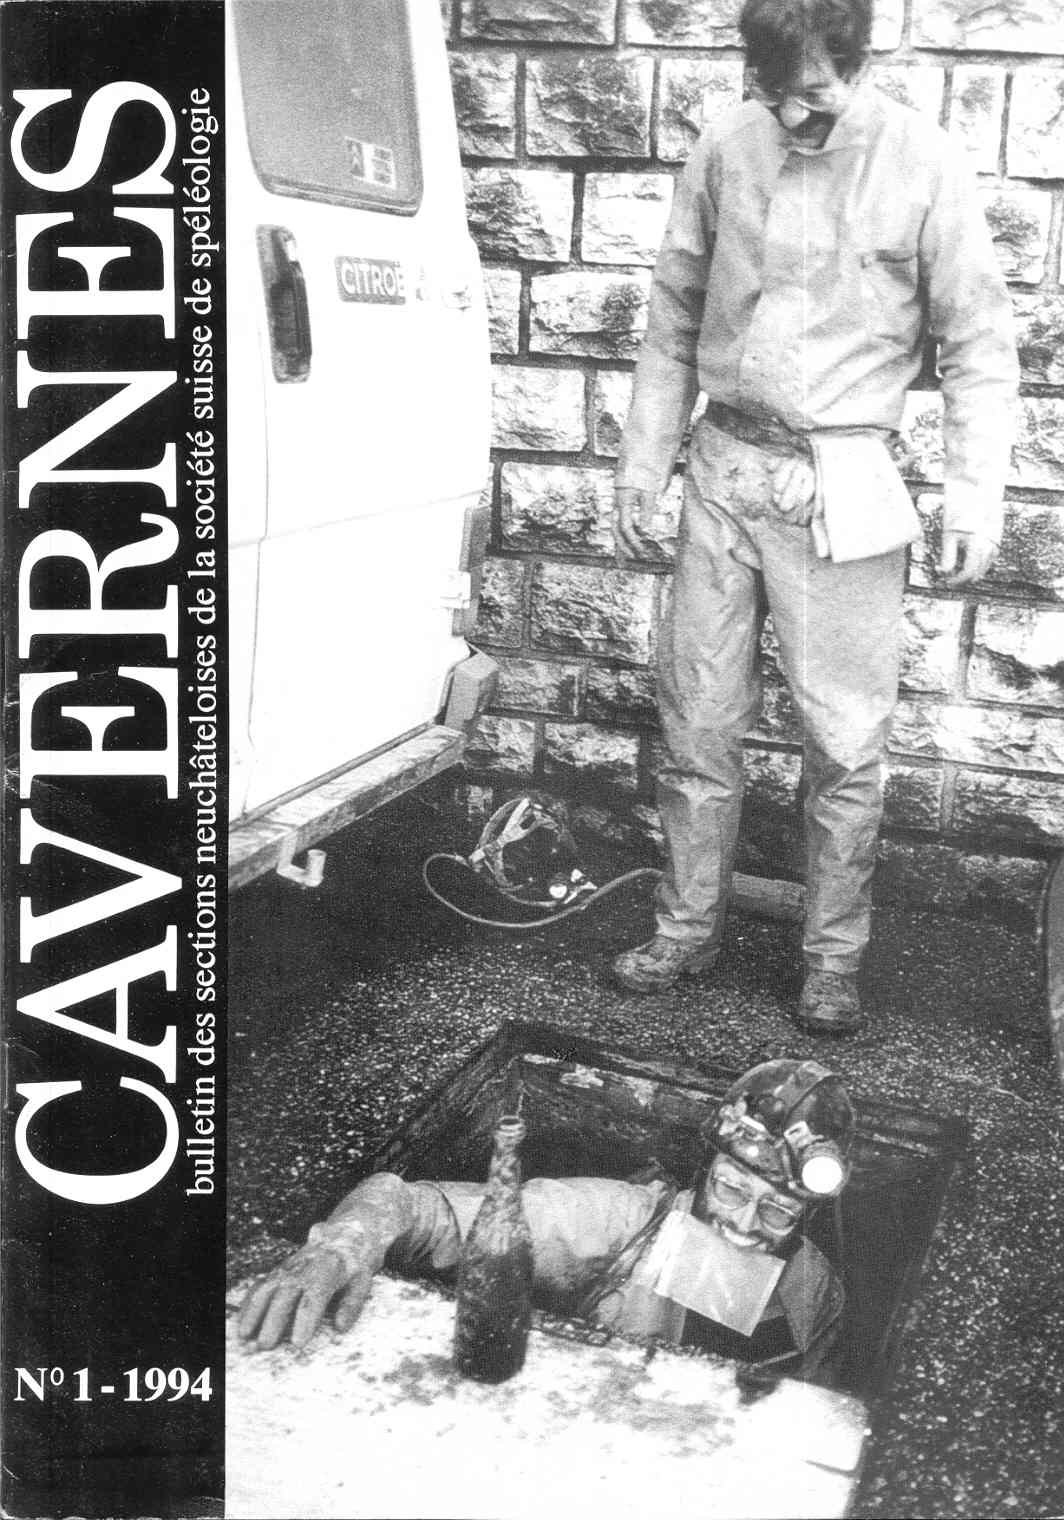 Cavernes/copertina anno 1994 n°1.jpg